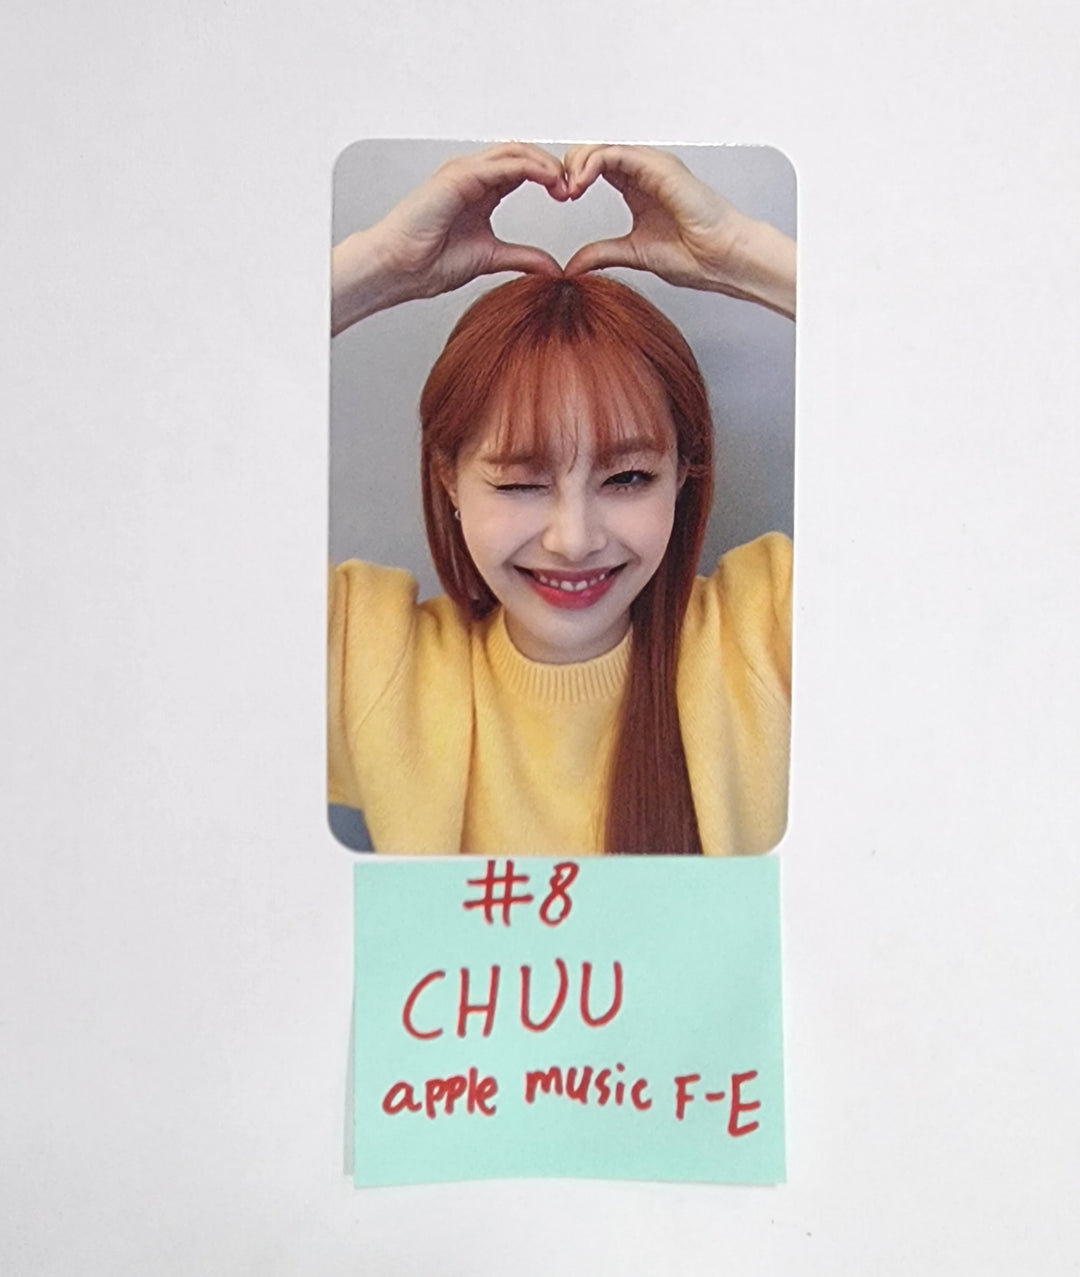 CHUU "Howl" - Apple Music Fansign Event Photocard [23.11.01]